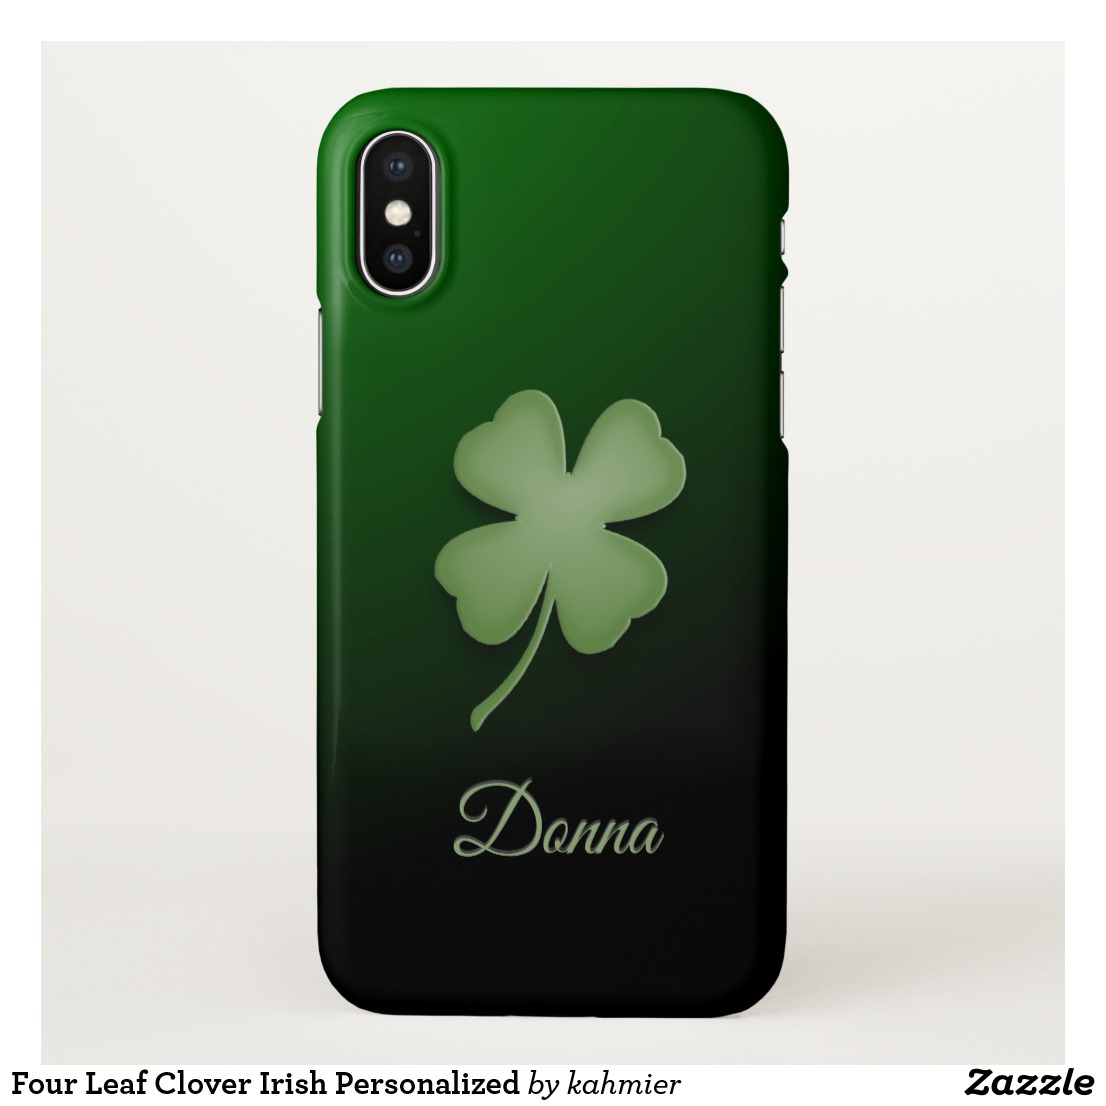 Four Leaf Clover Irish Personalized iPhone Case